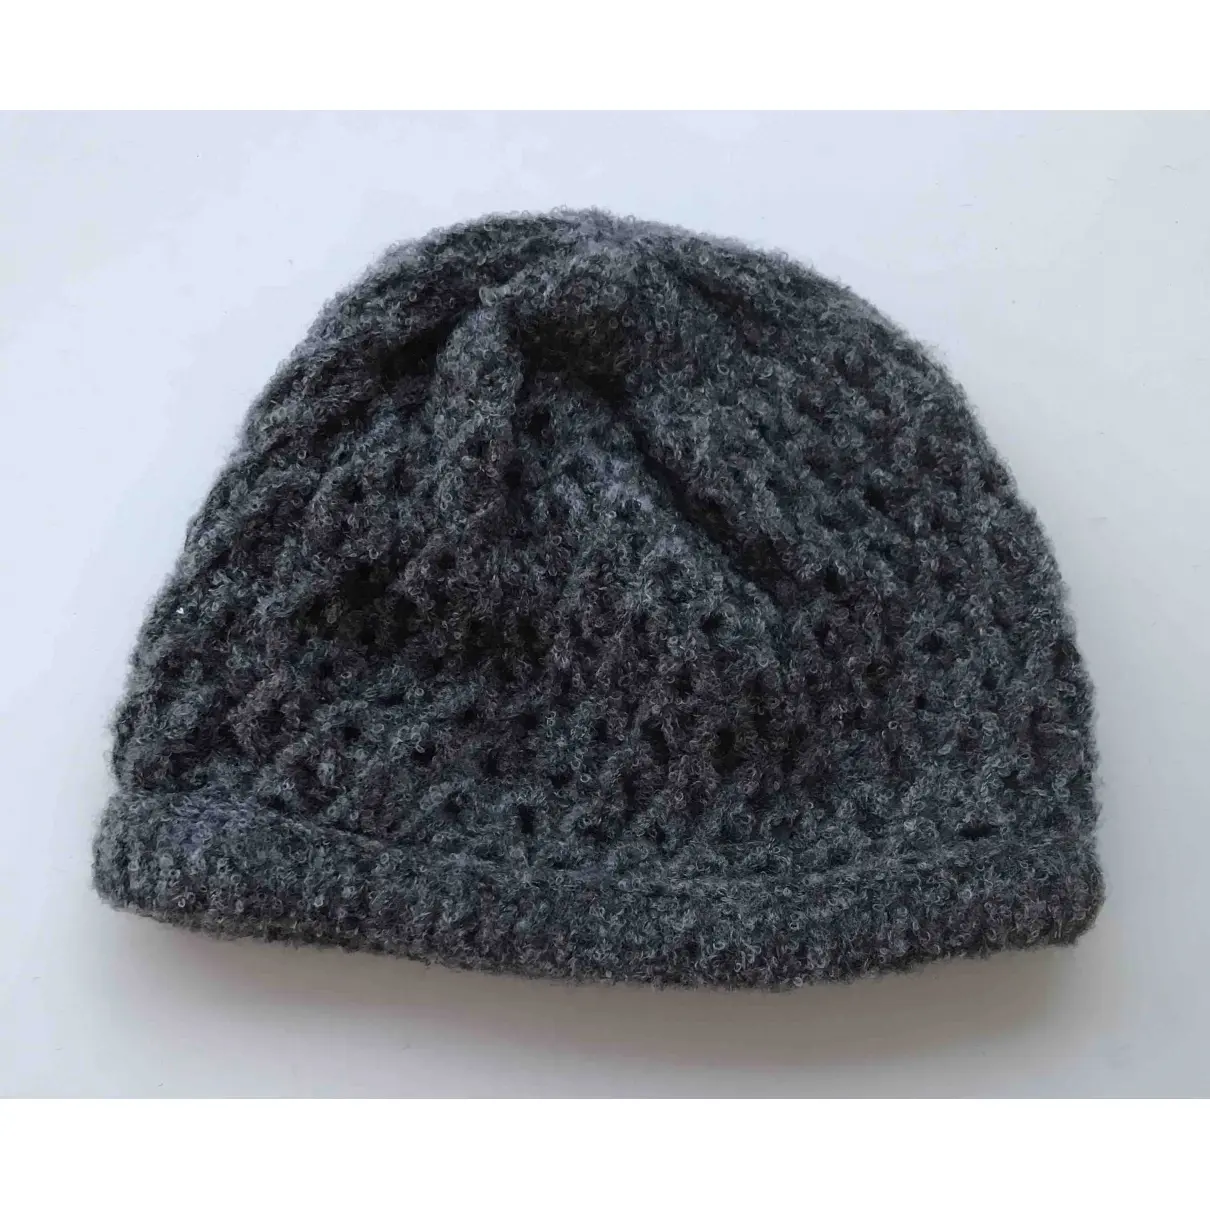 Blumarine Wool hat for sale